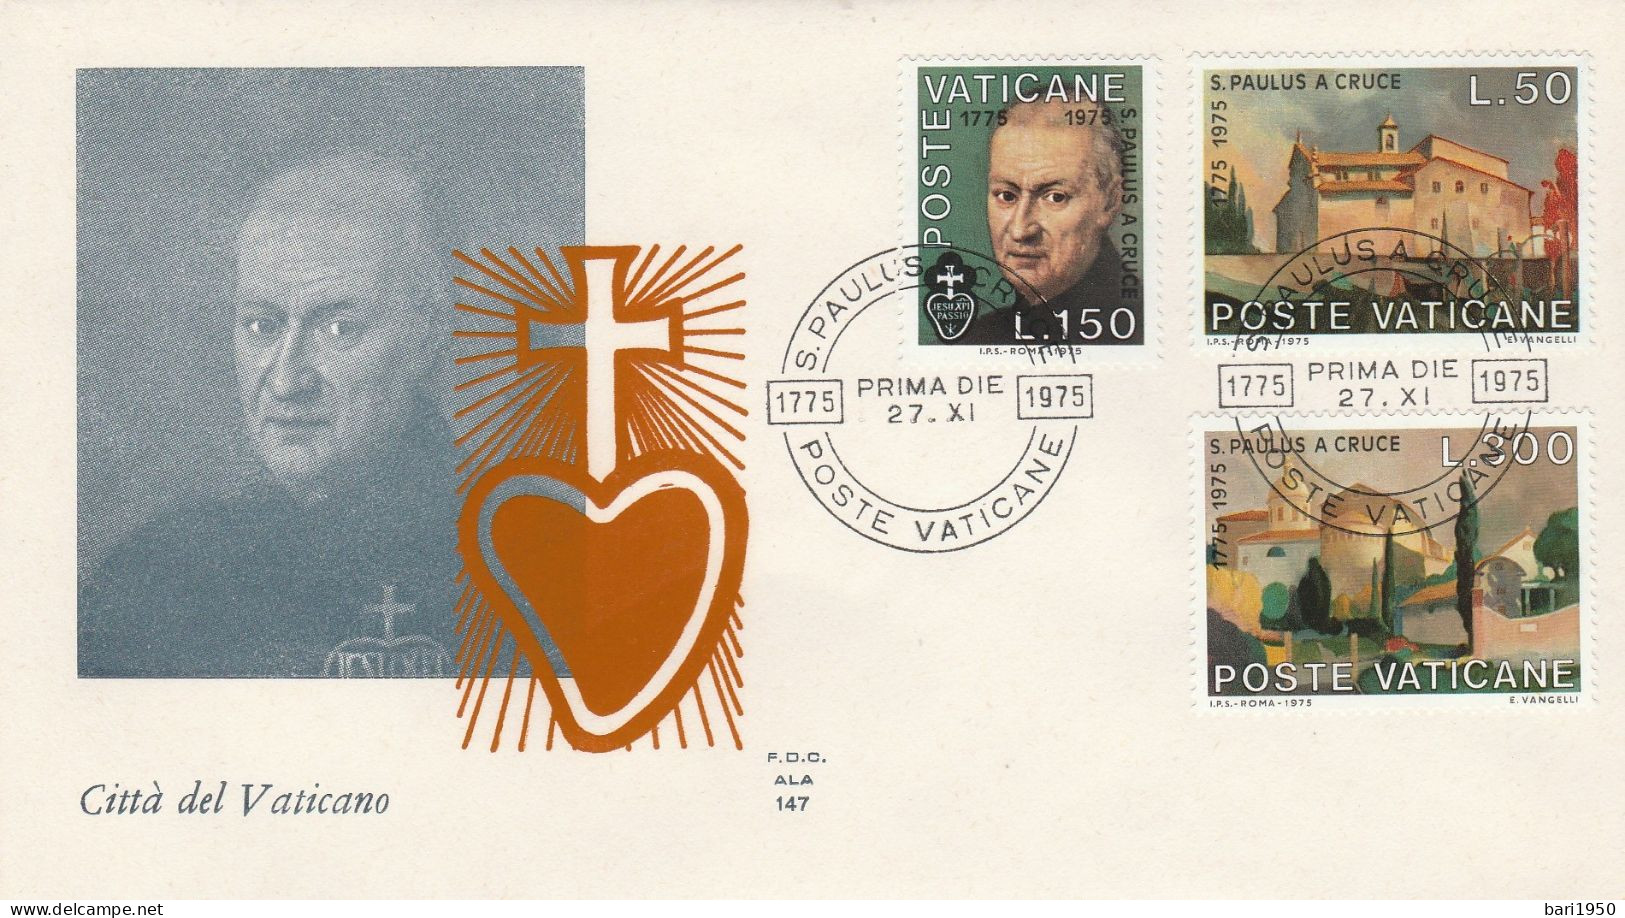 POSTE VATICANE - 3 Valori Da L.50 L.150 E L. 300 - S.PAULUS A CRUCE, Primo Giorno Di Emissione Su Busta - Used Stamps